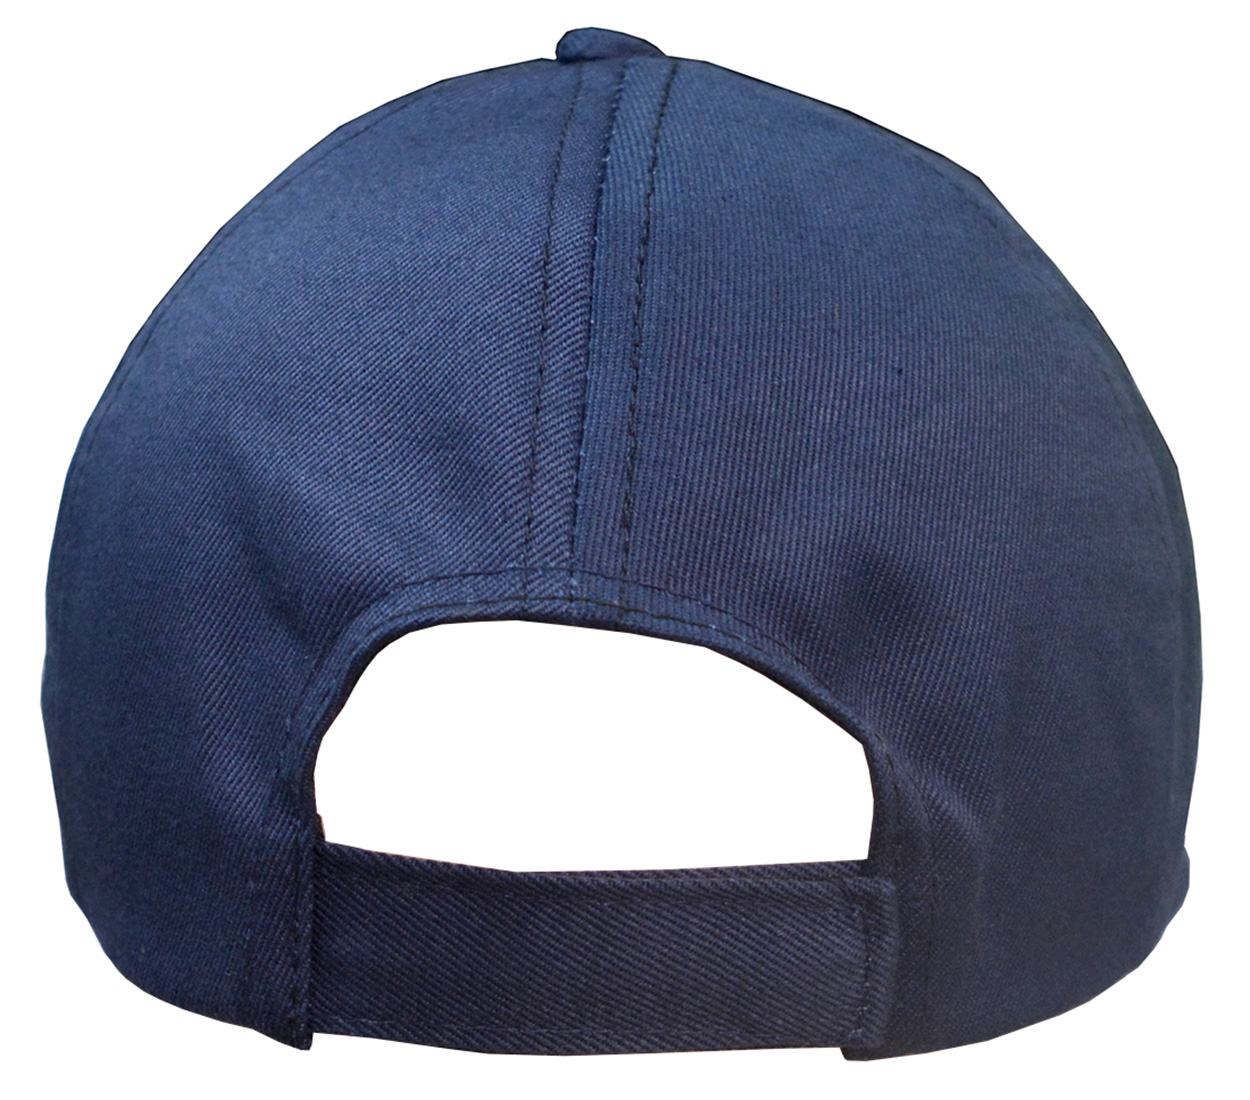 Buy 29k Men's Navy Blue Cotton Cap Online @ ₹199 from ShopClues